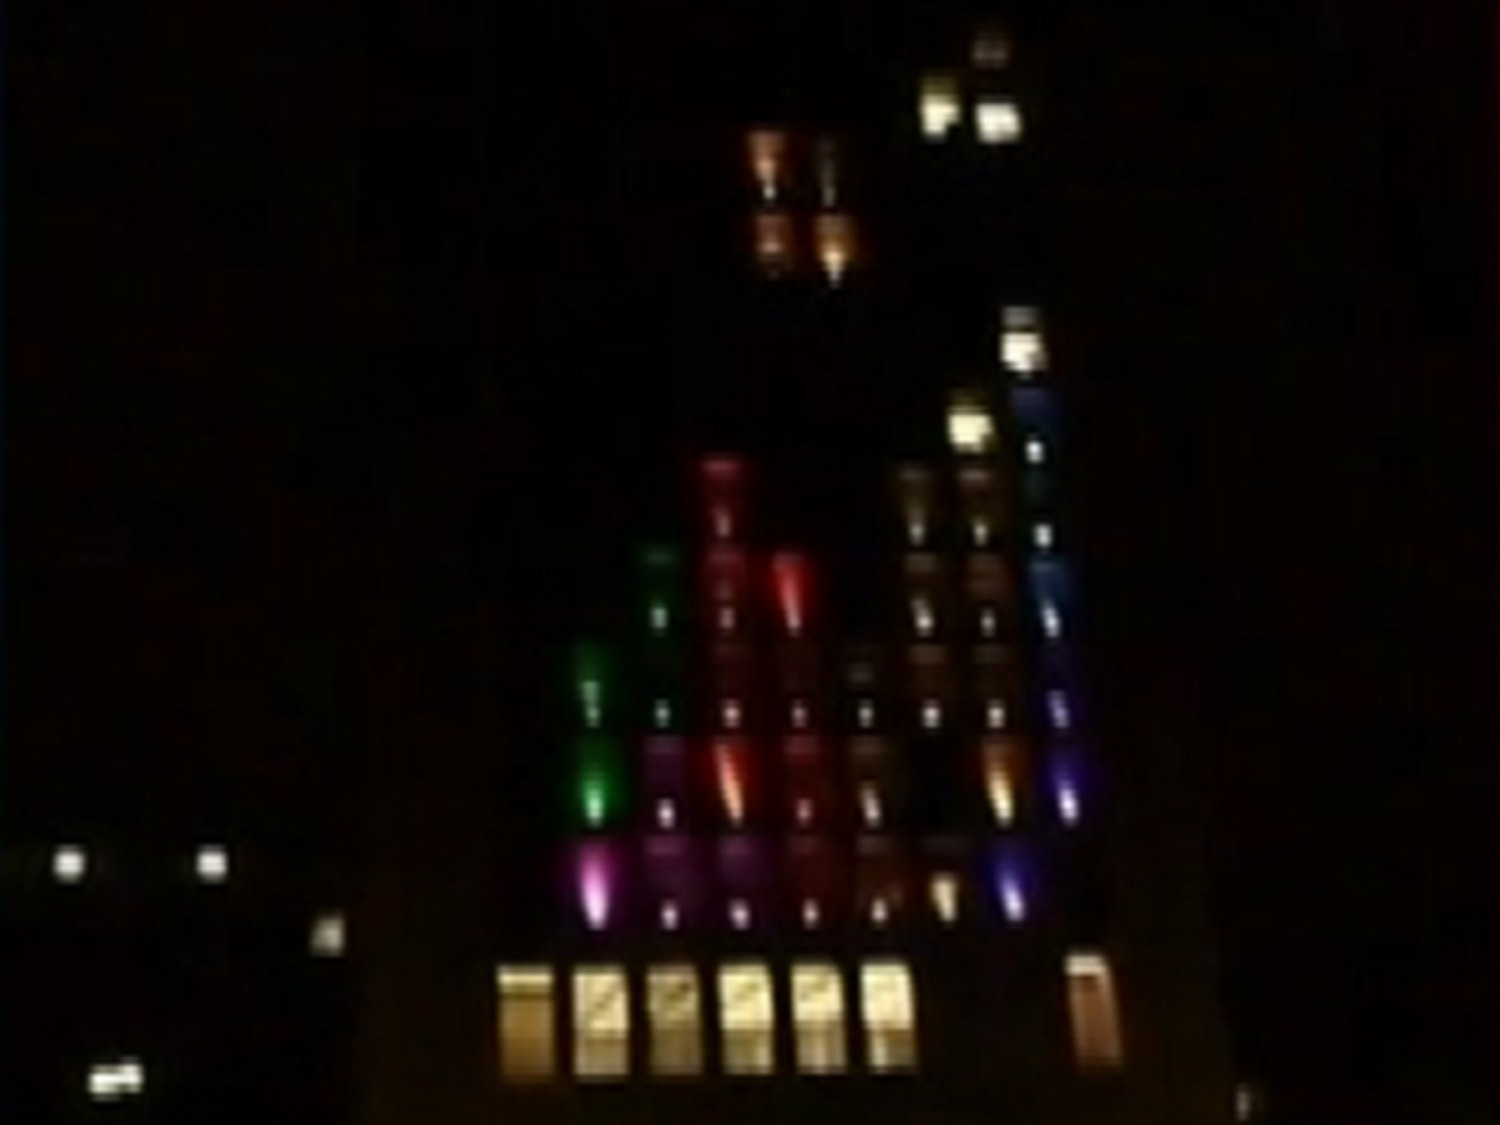 Students play Tetris on MIT building